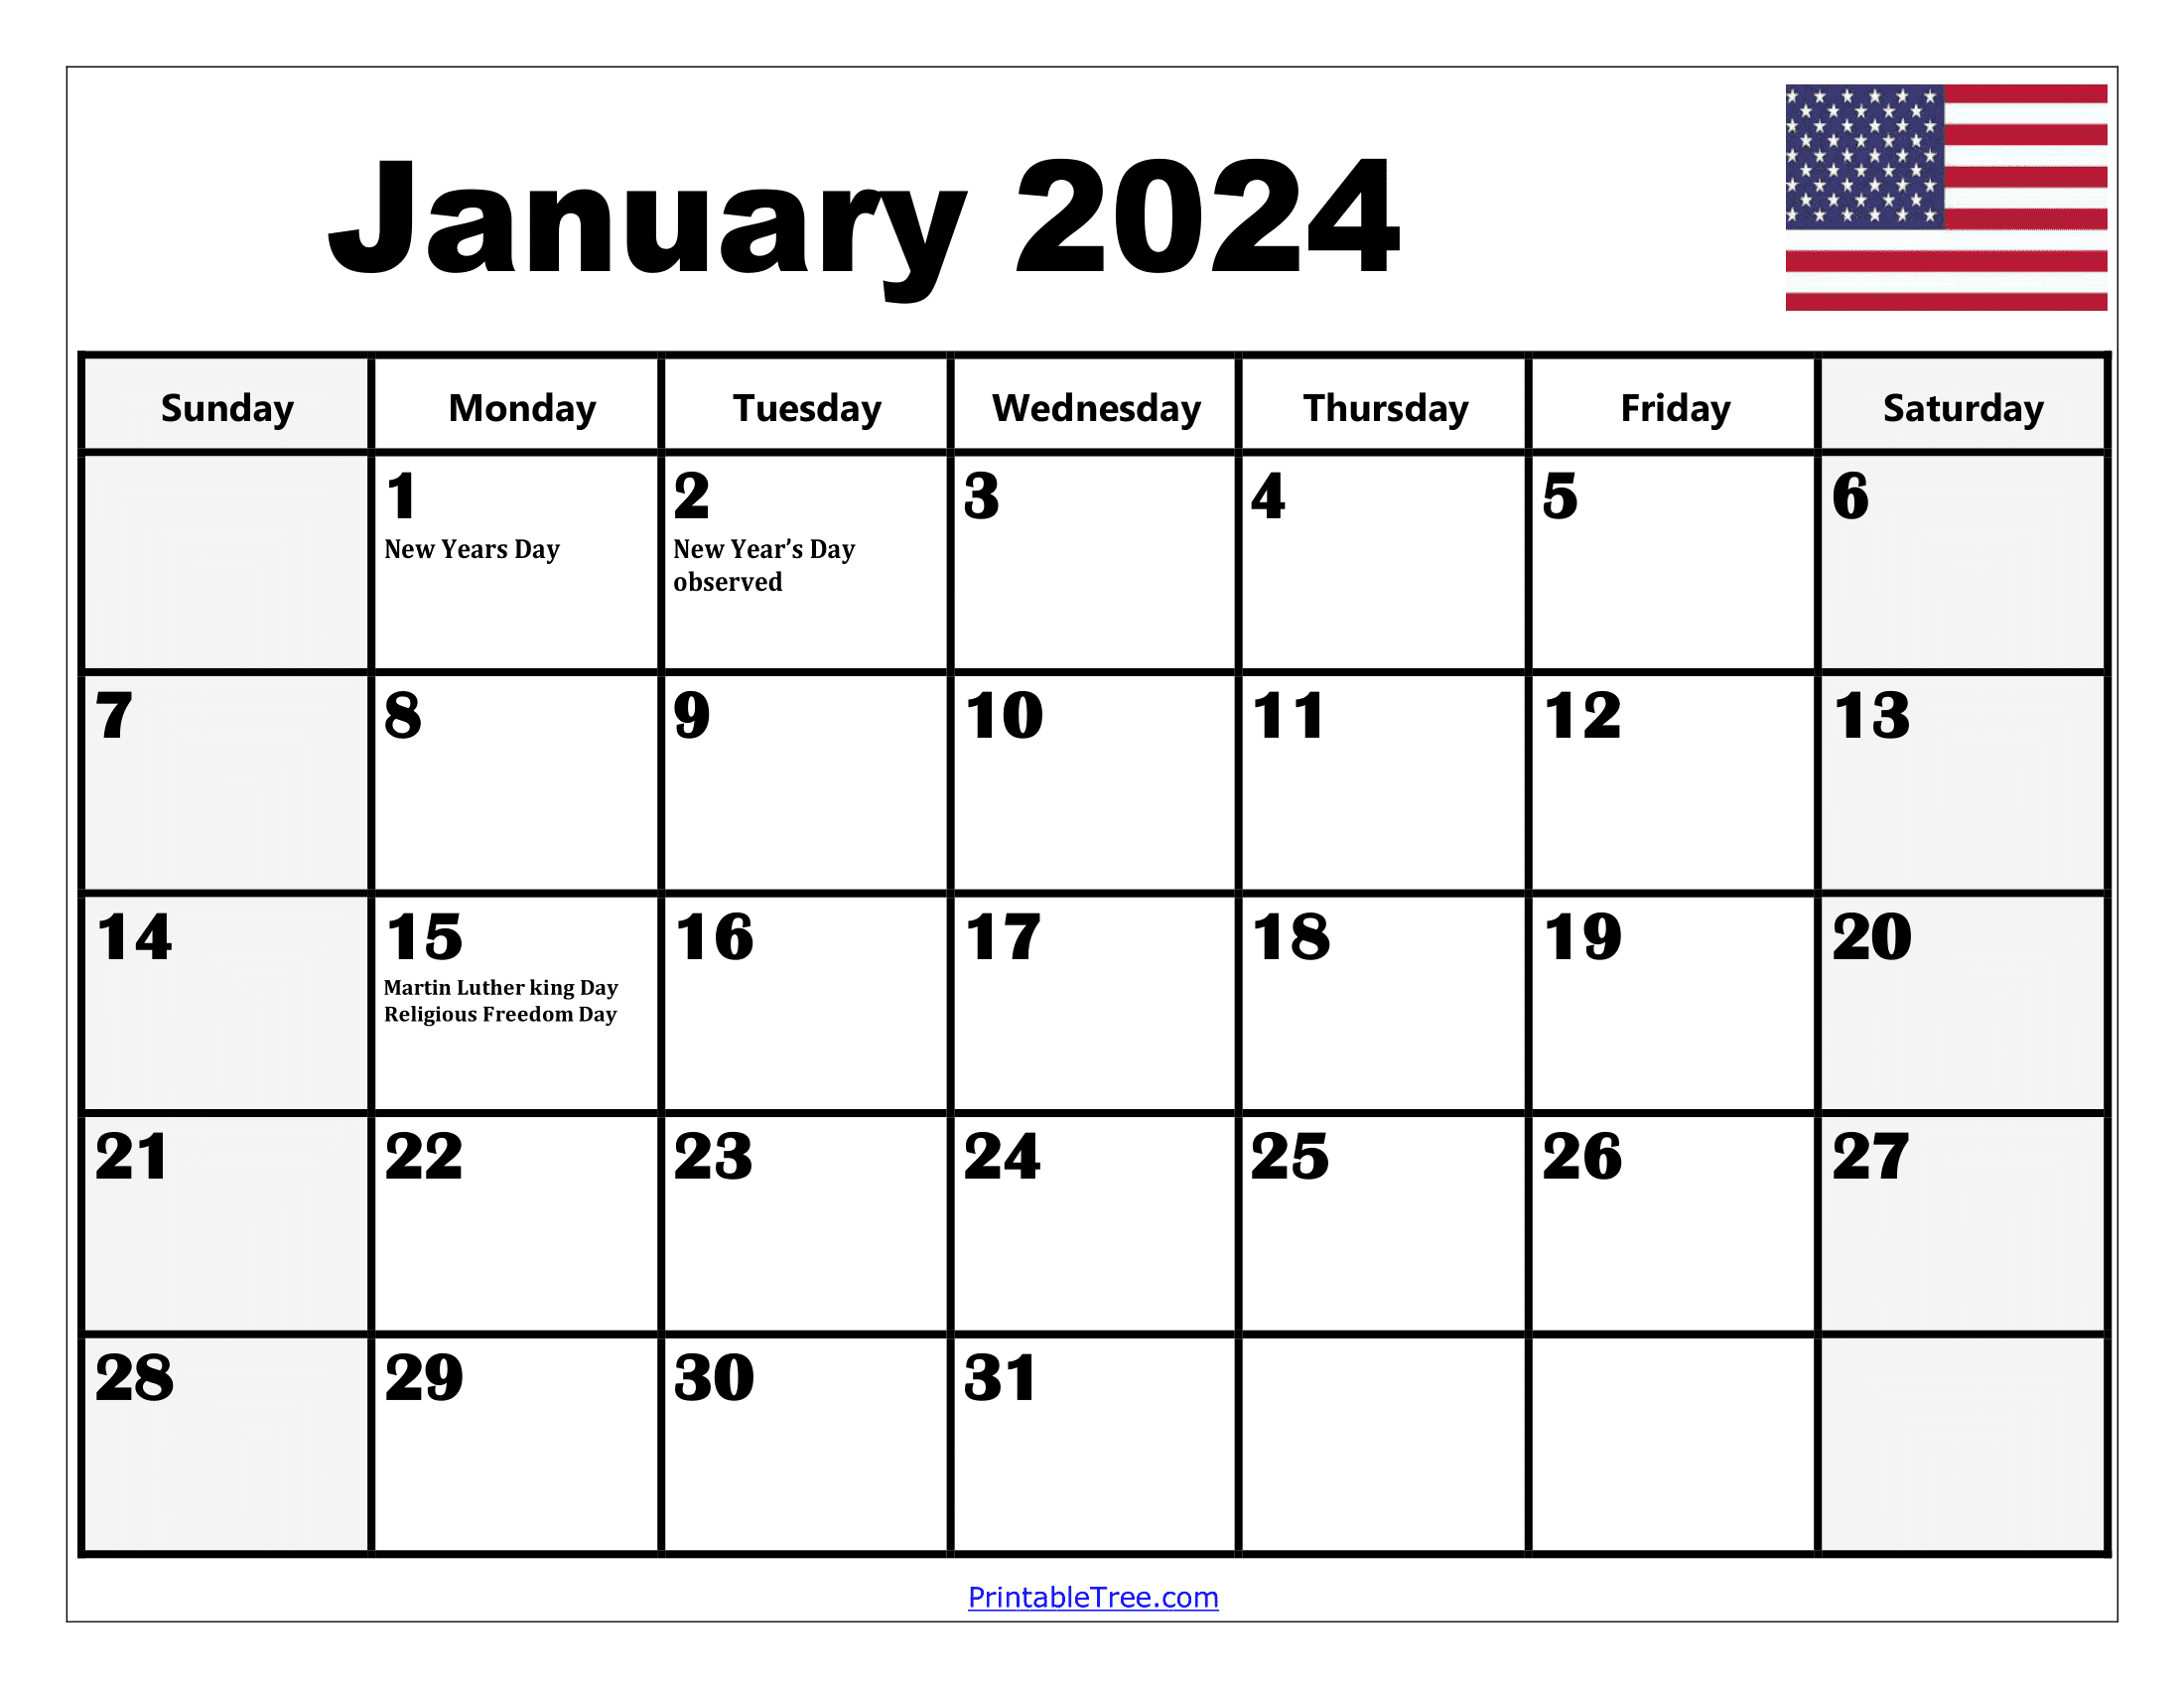 January 2024 Calendar Printable Pdf Template With Holidays for January 2024 Calendar With Holidays Free Printable